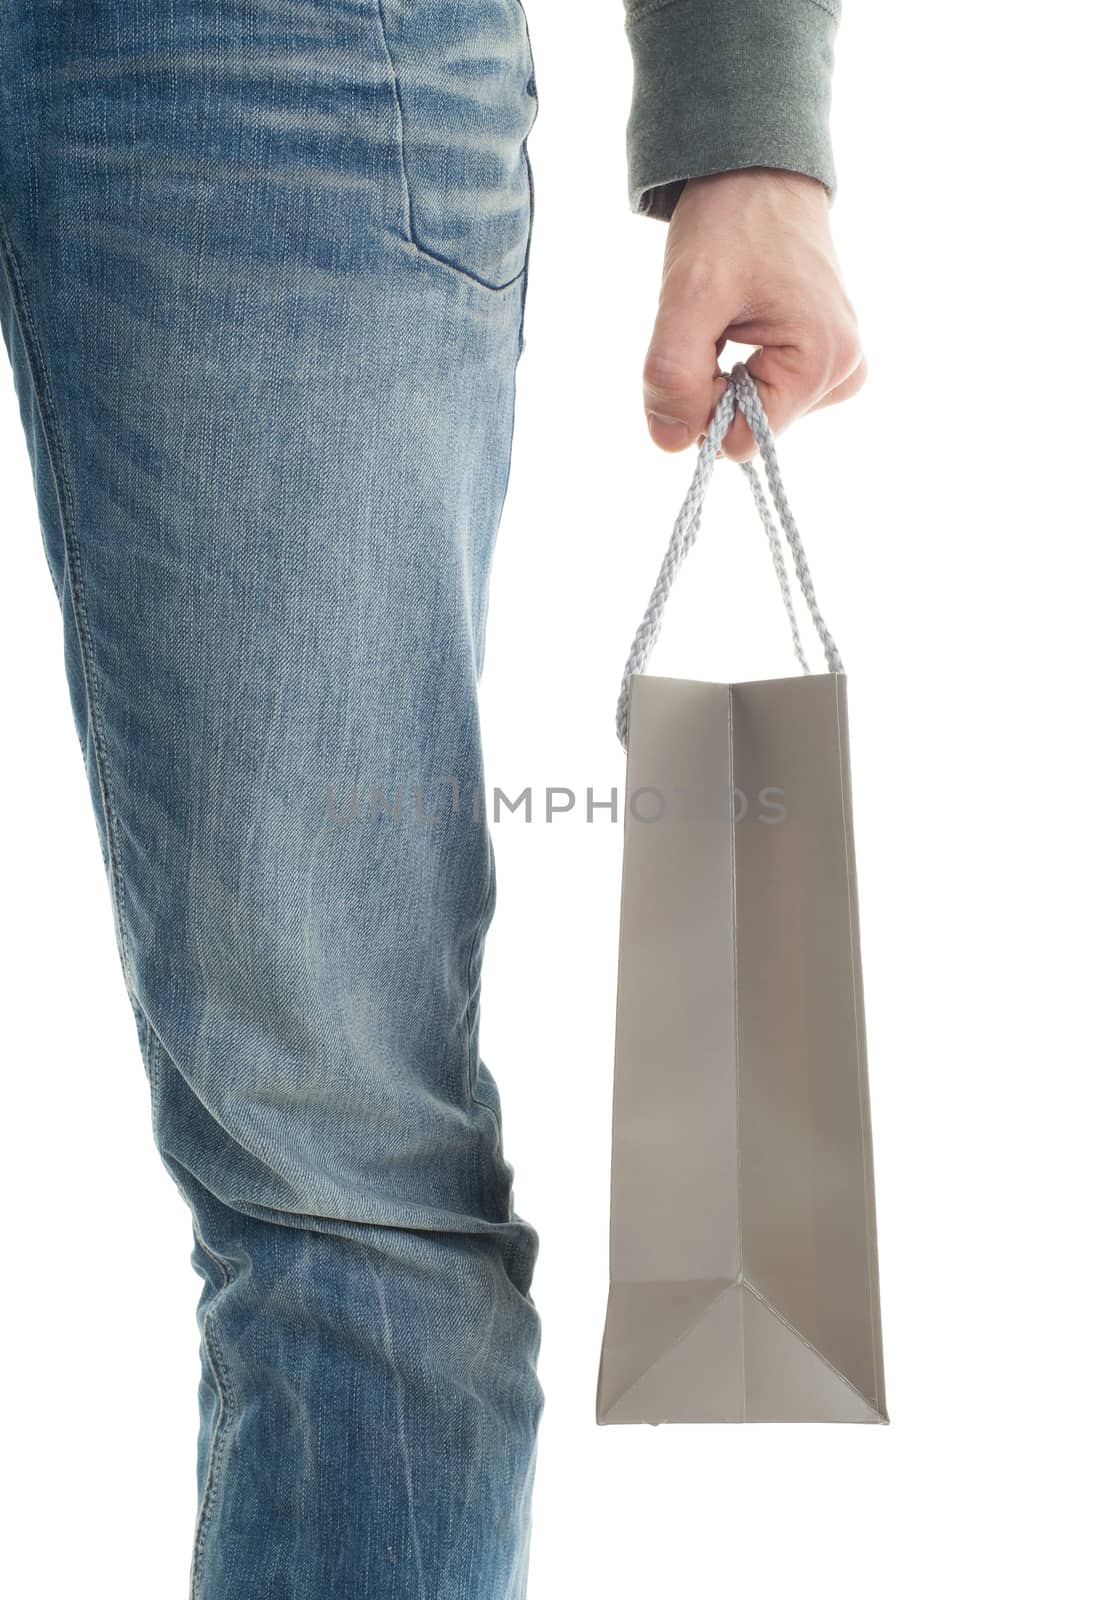 Shopping man, gift bag by michaklootwijk